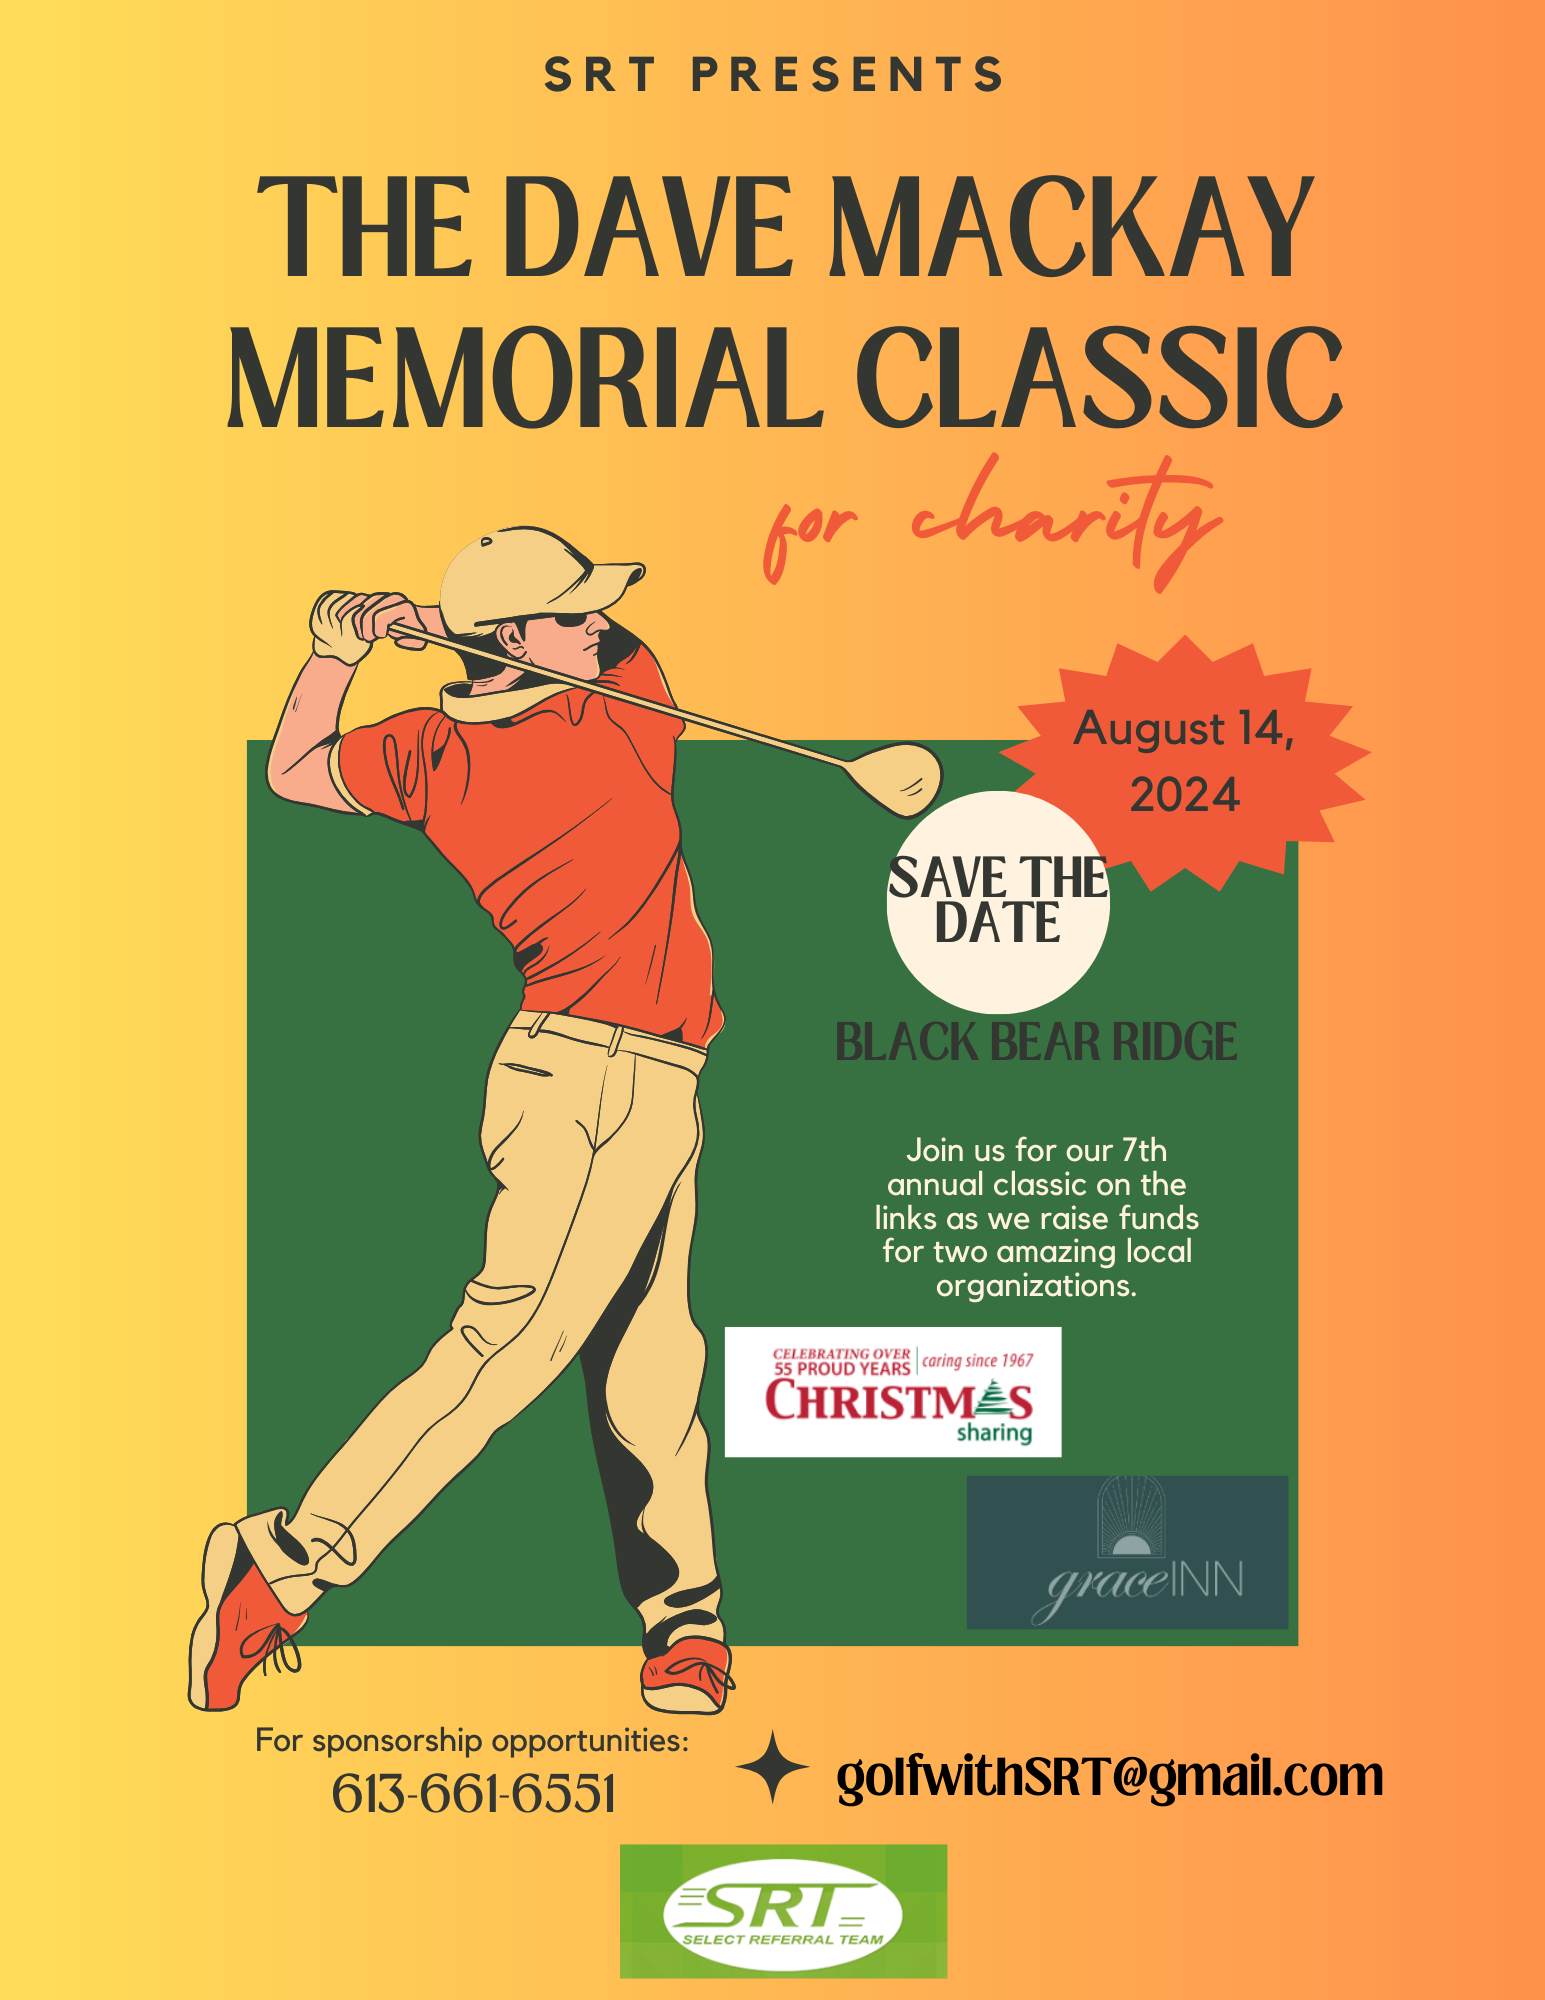 Join us for the Dave Mackay Memorial Charity Golf Tournament at Black Bear Ridge!